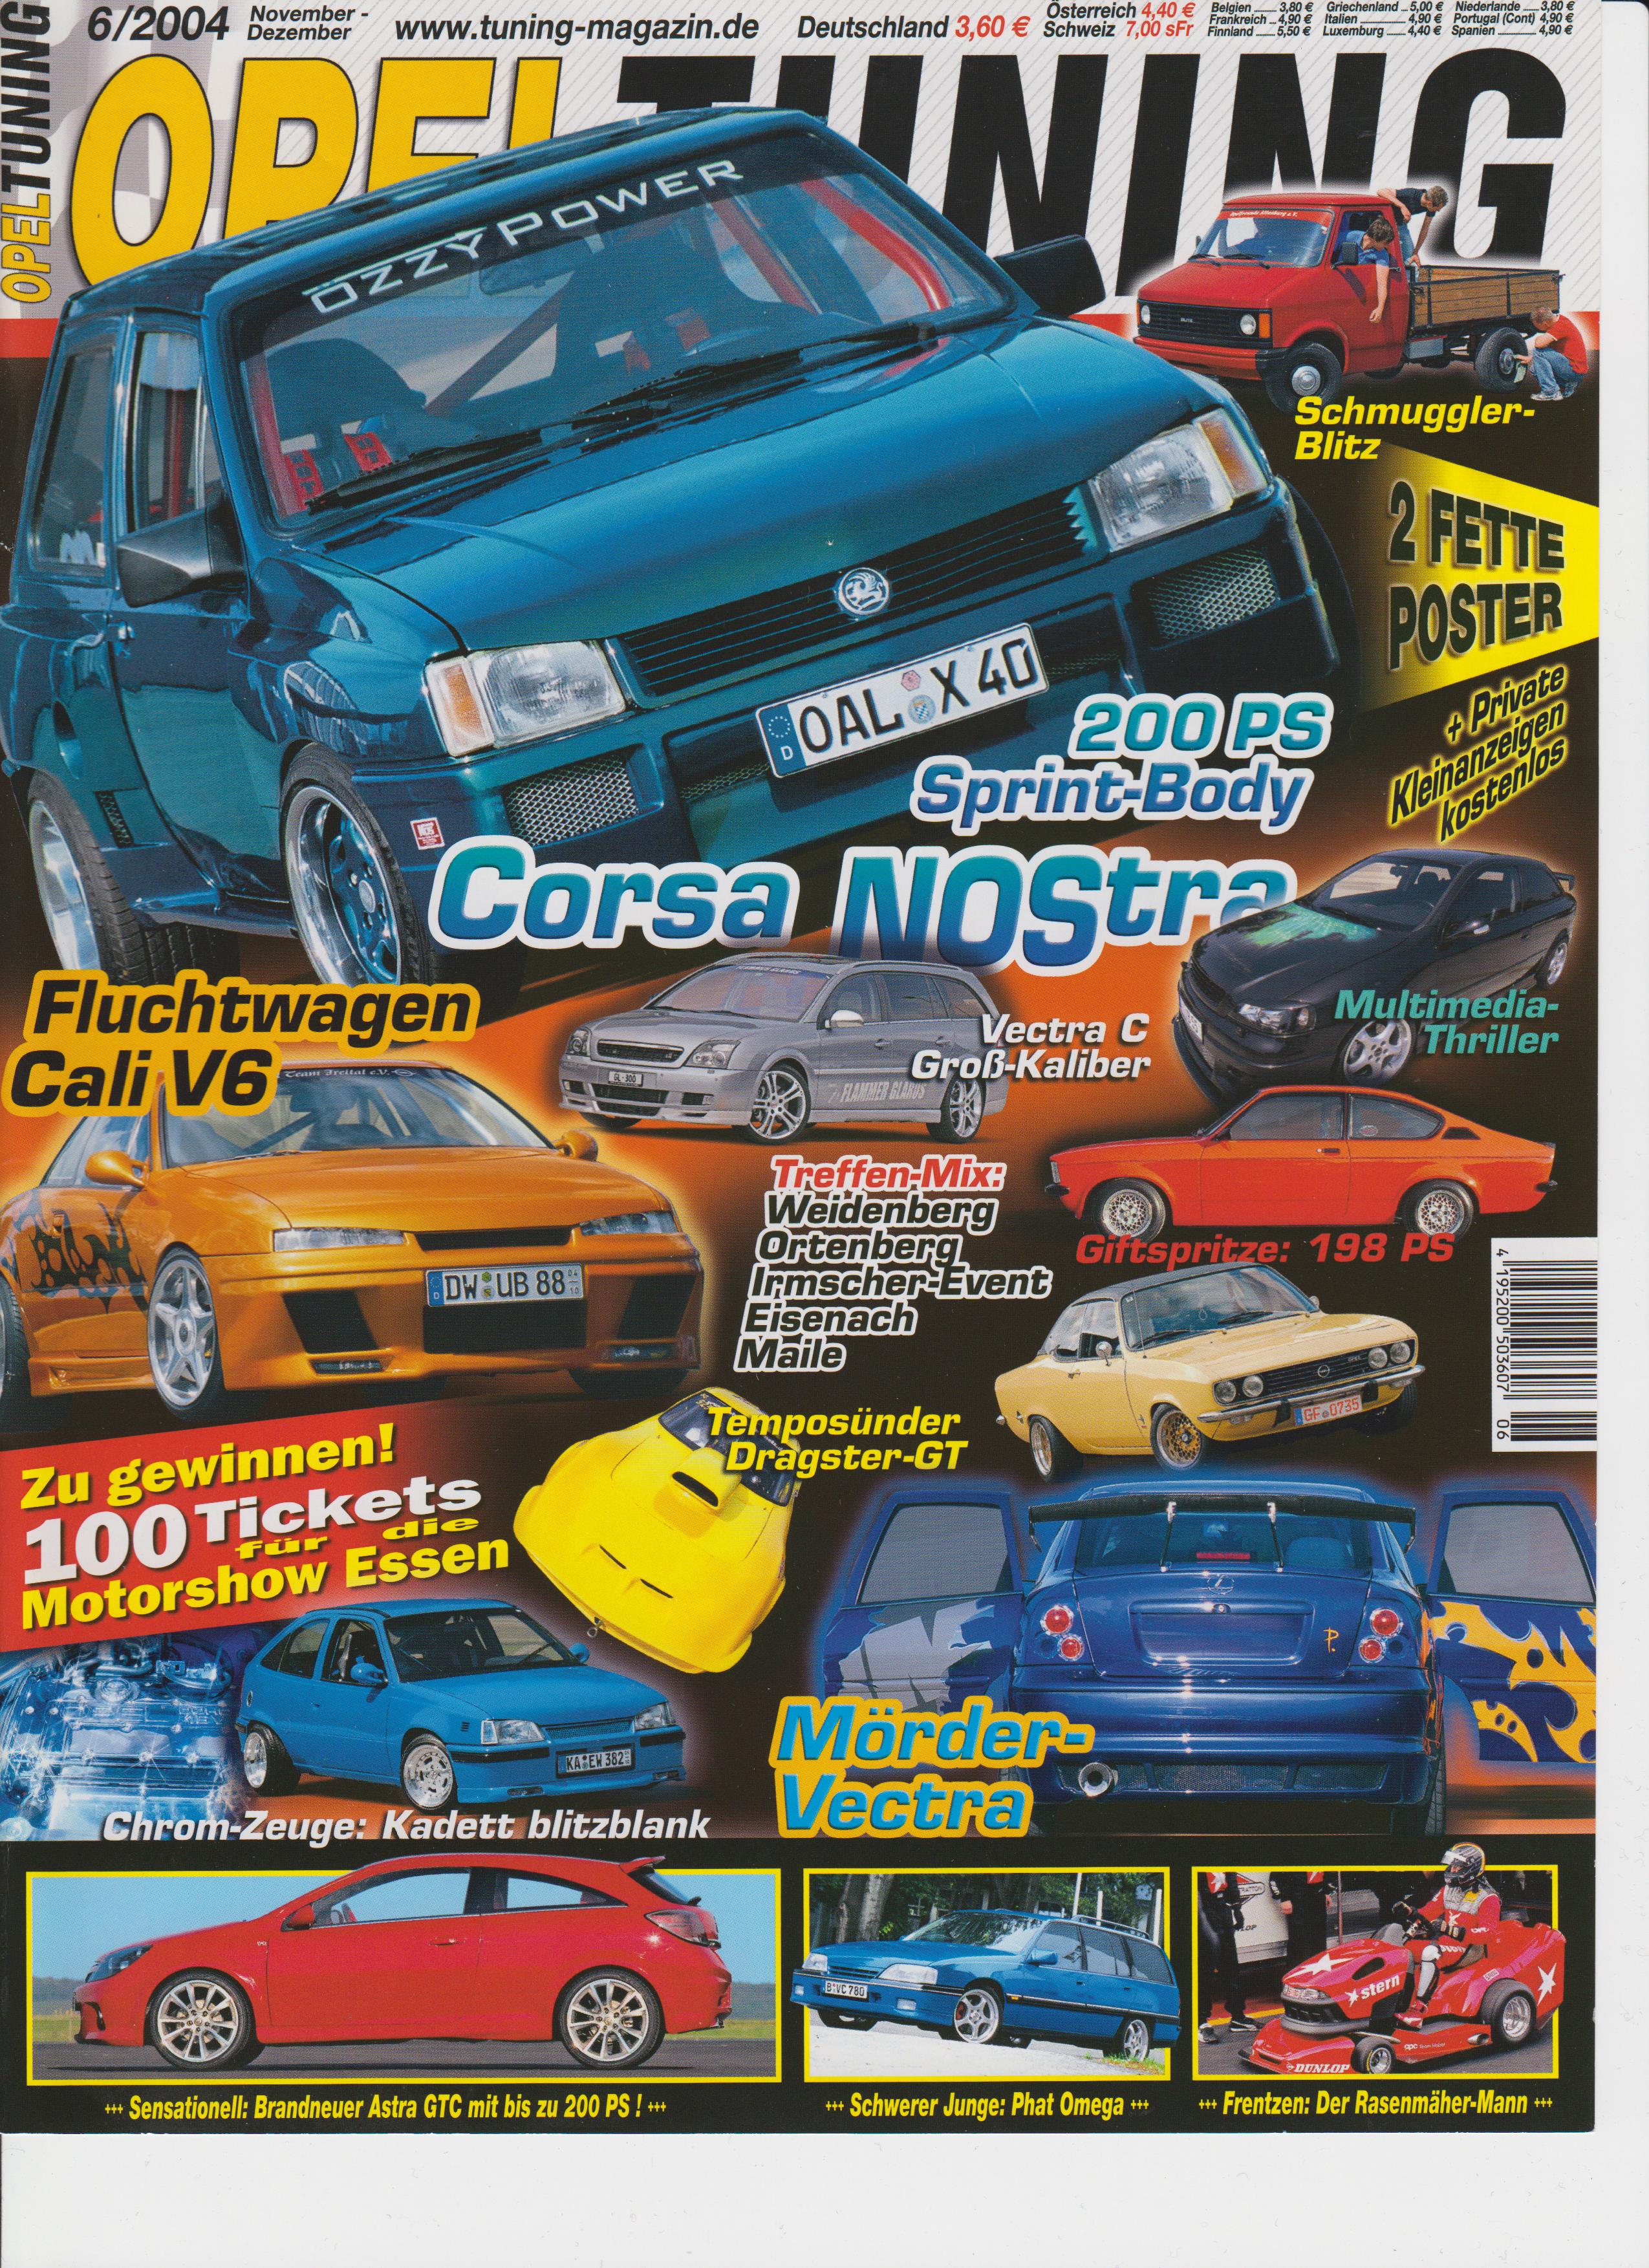 Specialist magazine OpelTuning 06 2004